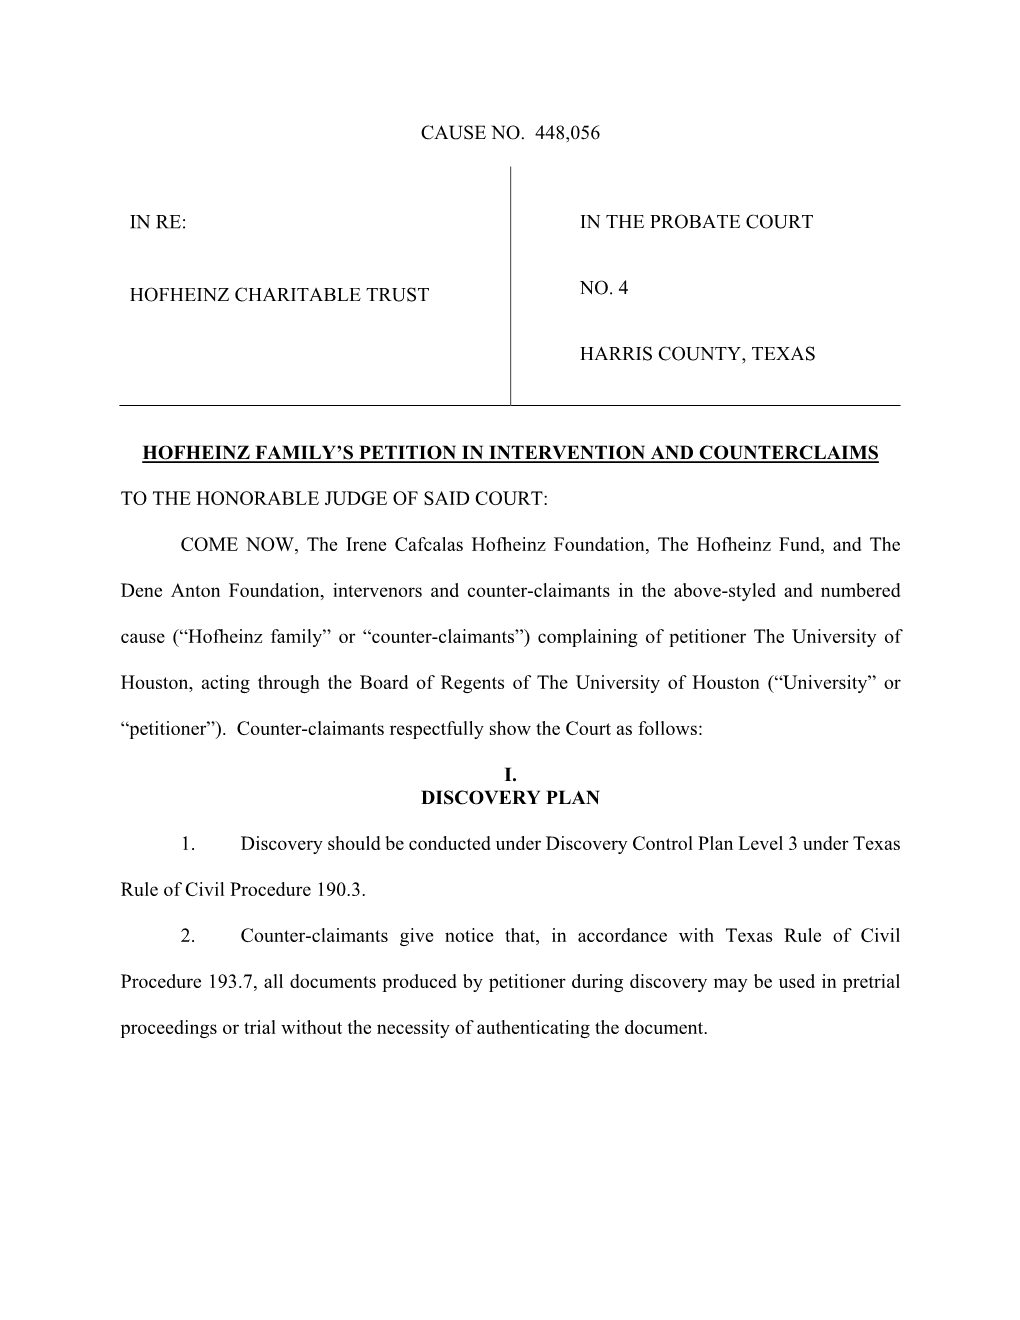 Hofheinz Charitable Trust in the Probate Court No. 4 Harris County, Texas Hofheinz Family's Petiti